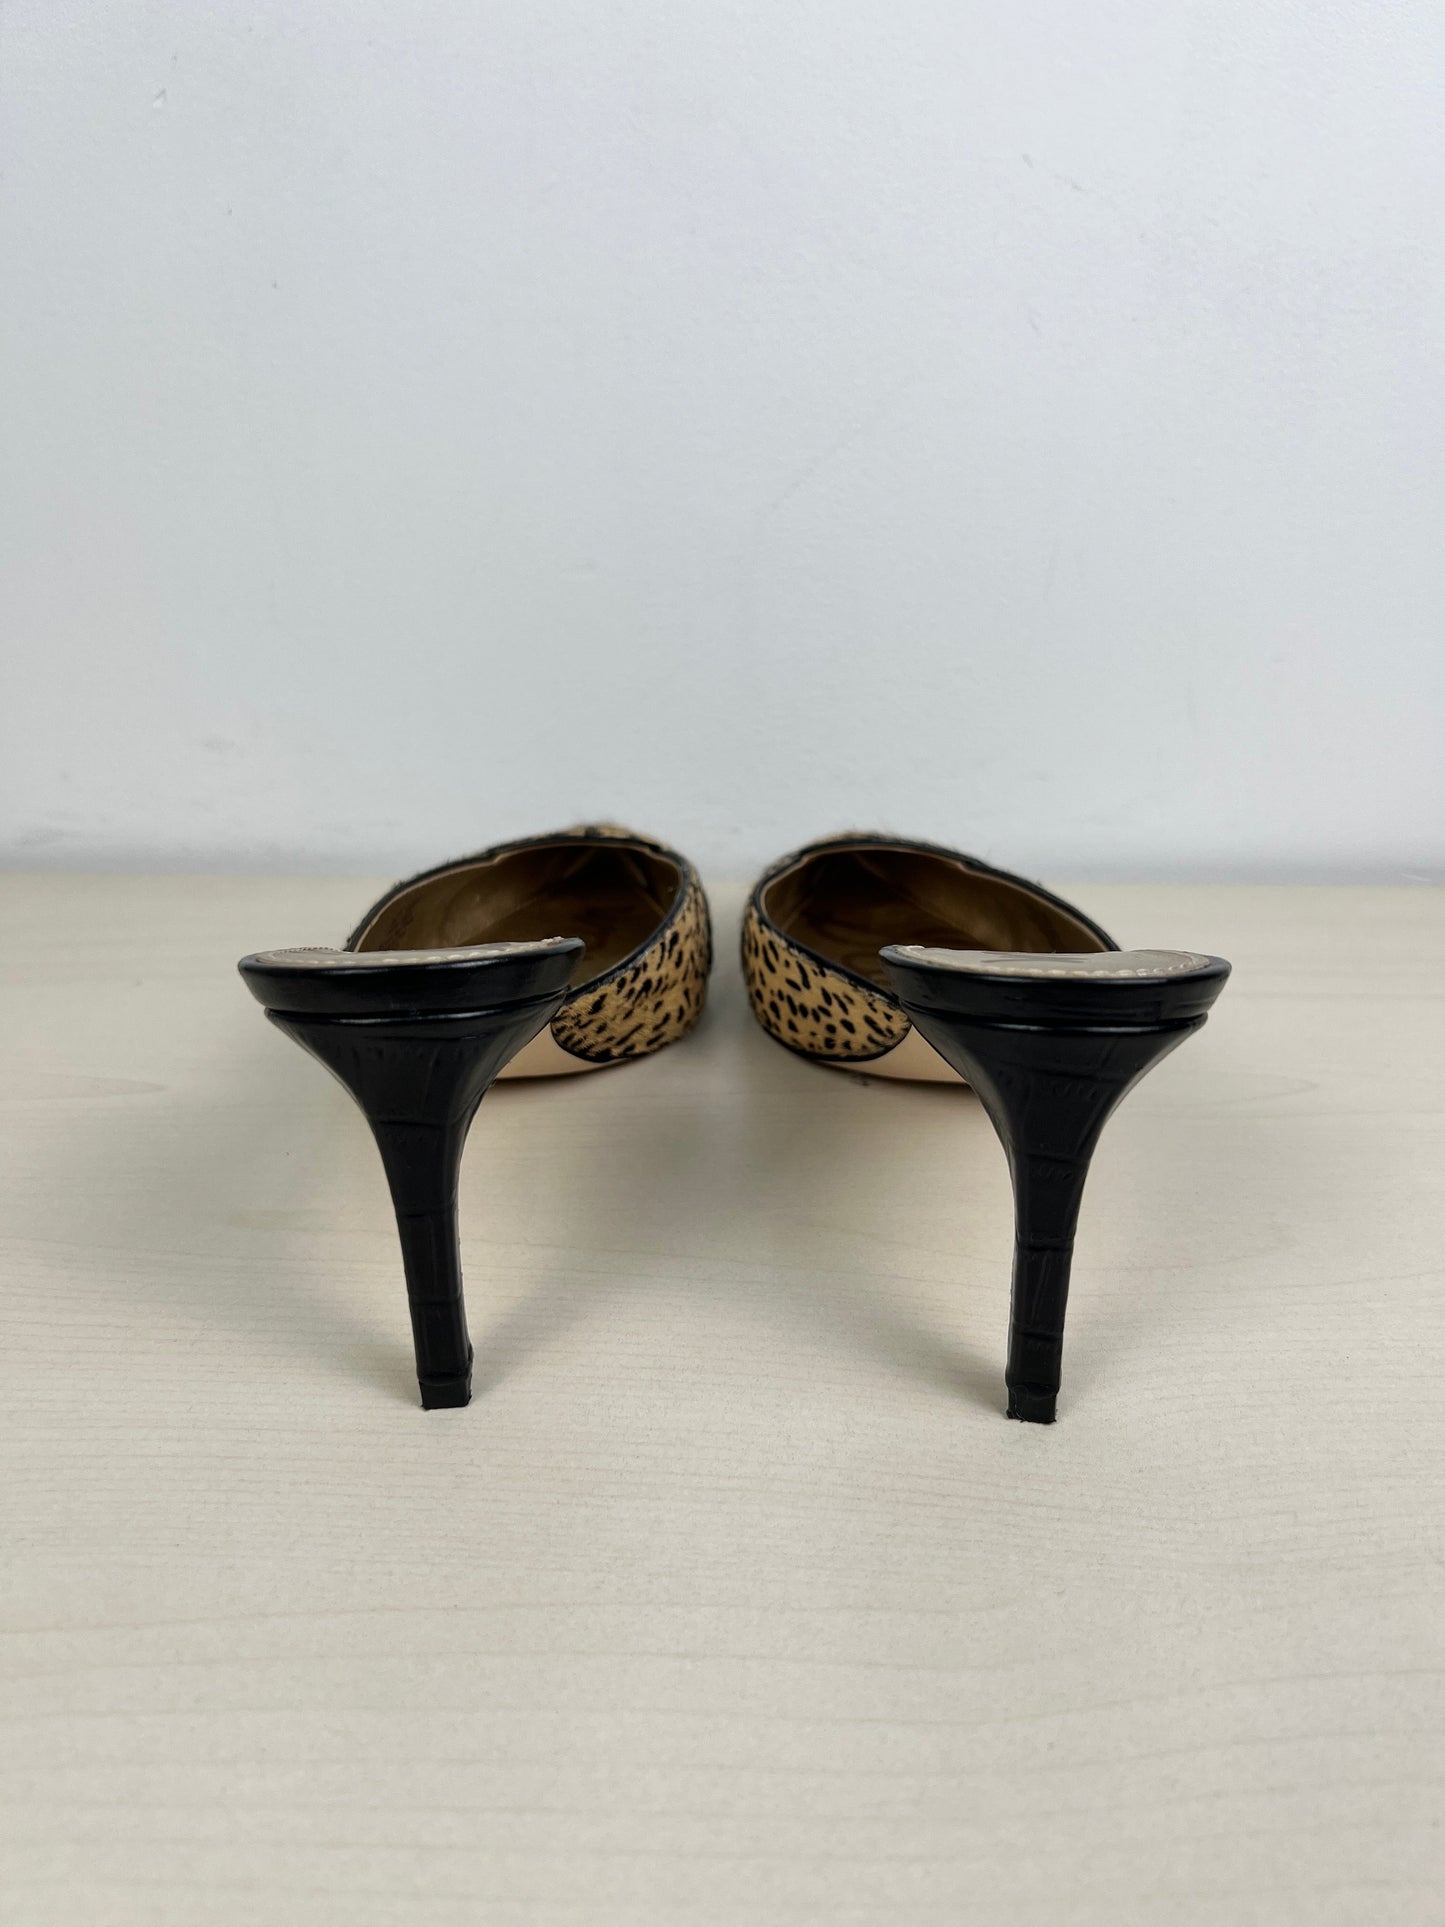 Animal Print Shoes Heels Stiletto Sam Edelman, Size 8